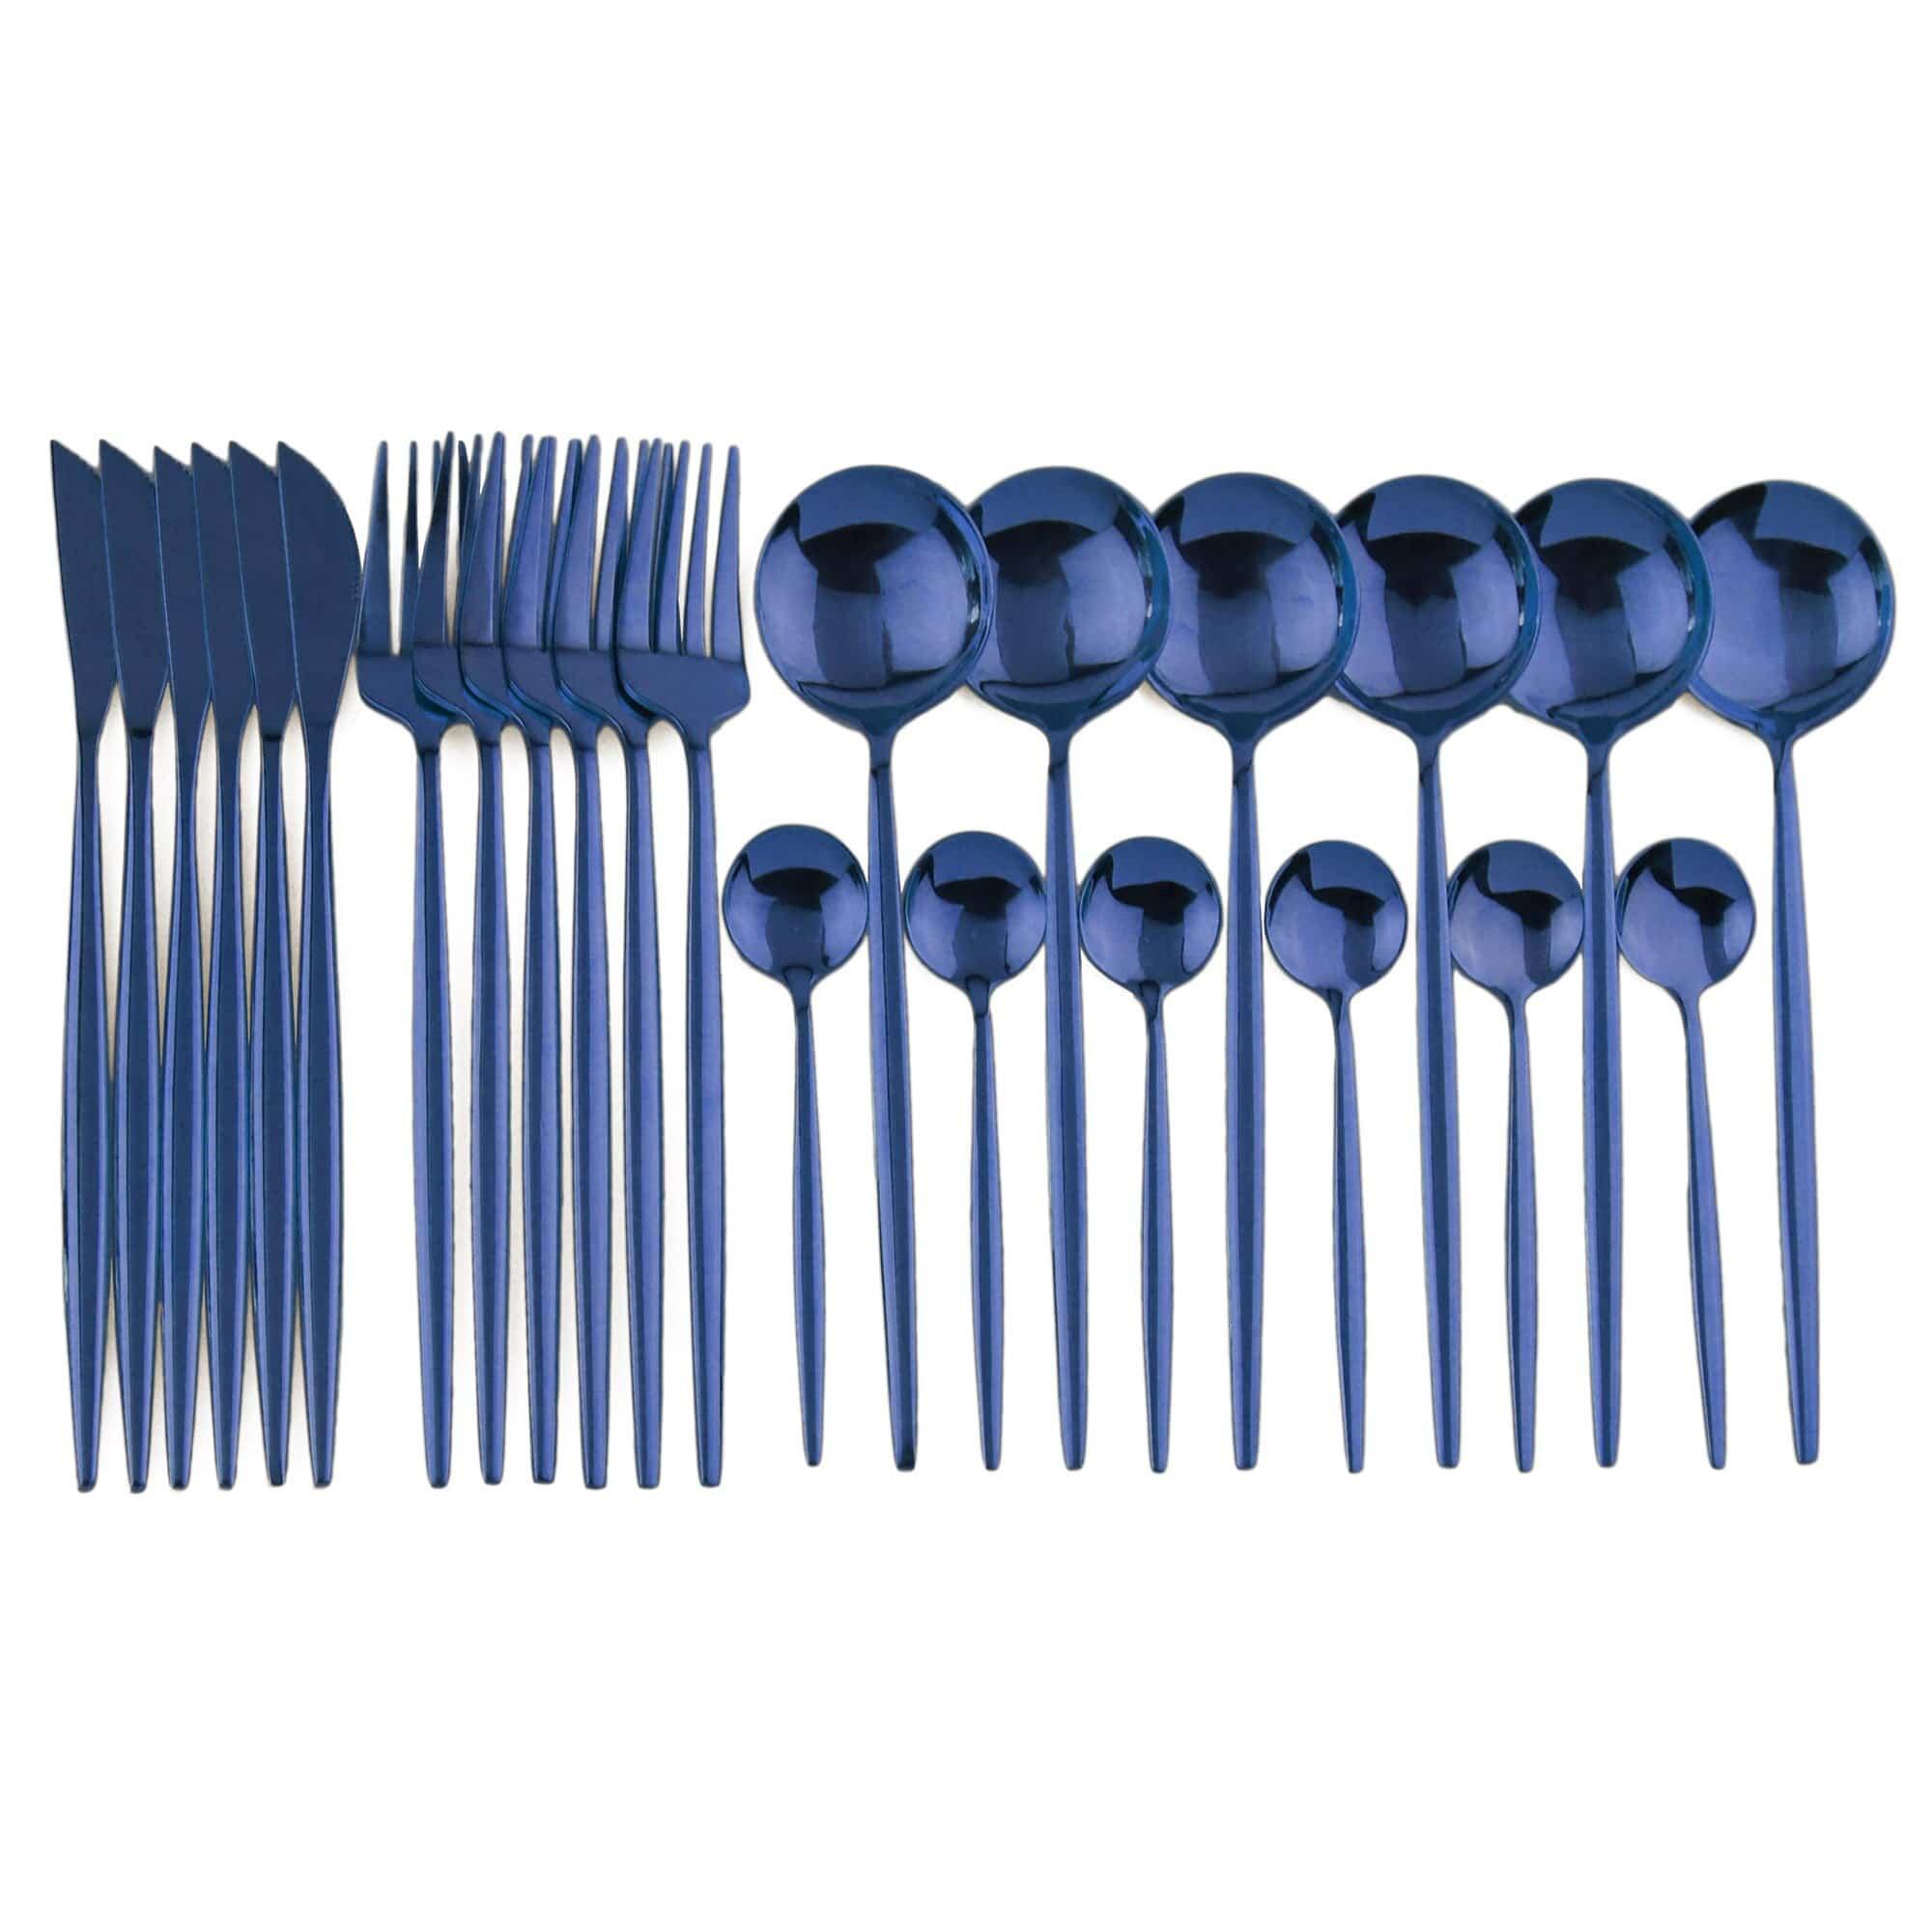 Shop 100003310 24Pcs Blue Casper Cutlery Set Mademoiselle Home Decor